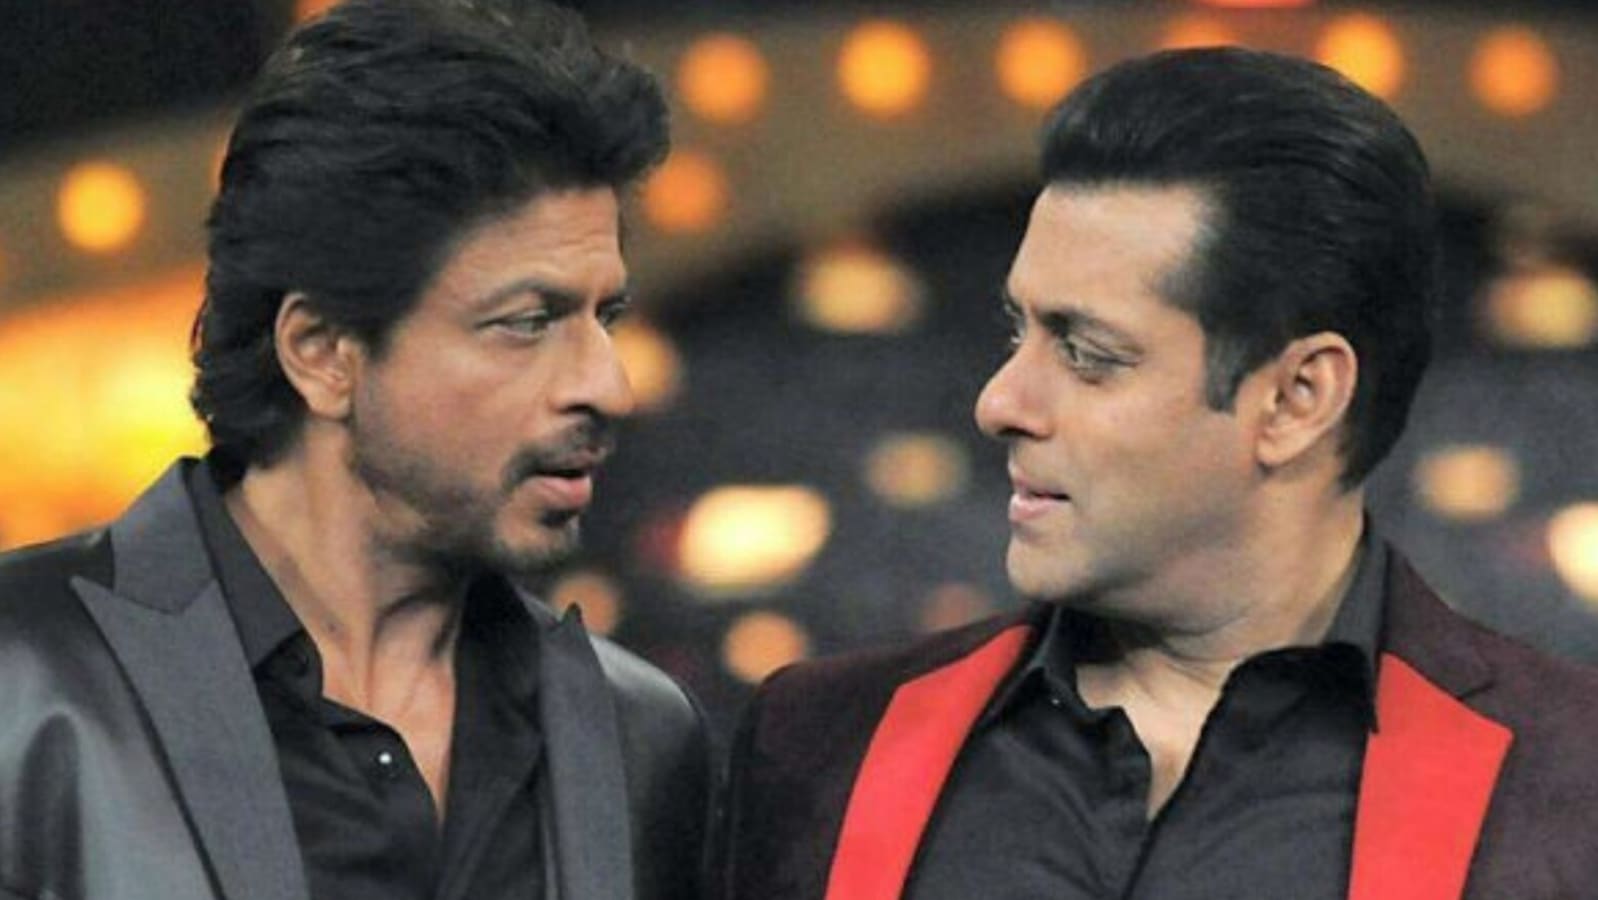 सालों बाद बड़े परदे पर साथ दिखेंगे शाहरुख और सलमान - Shahrukh and Salman will be seen together on the big screen after years